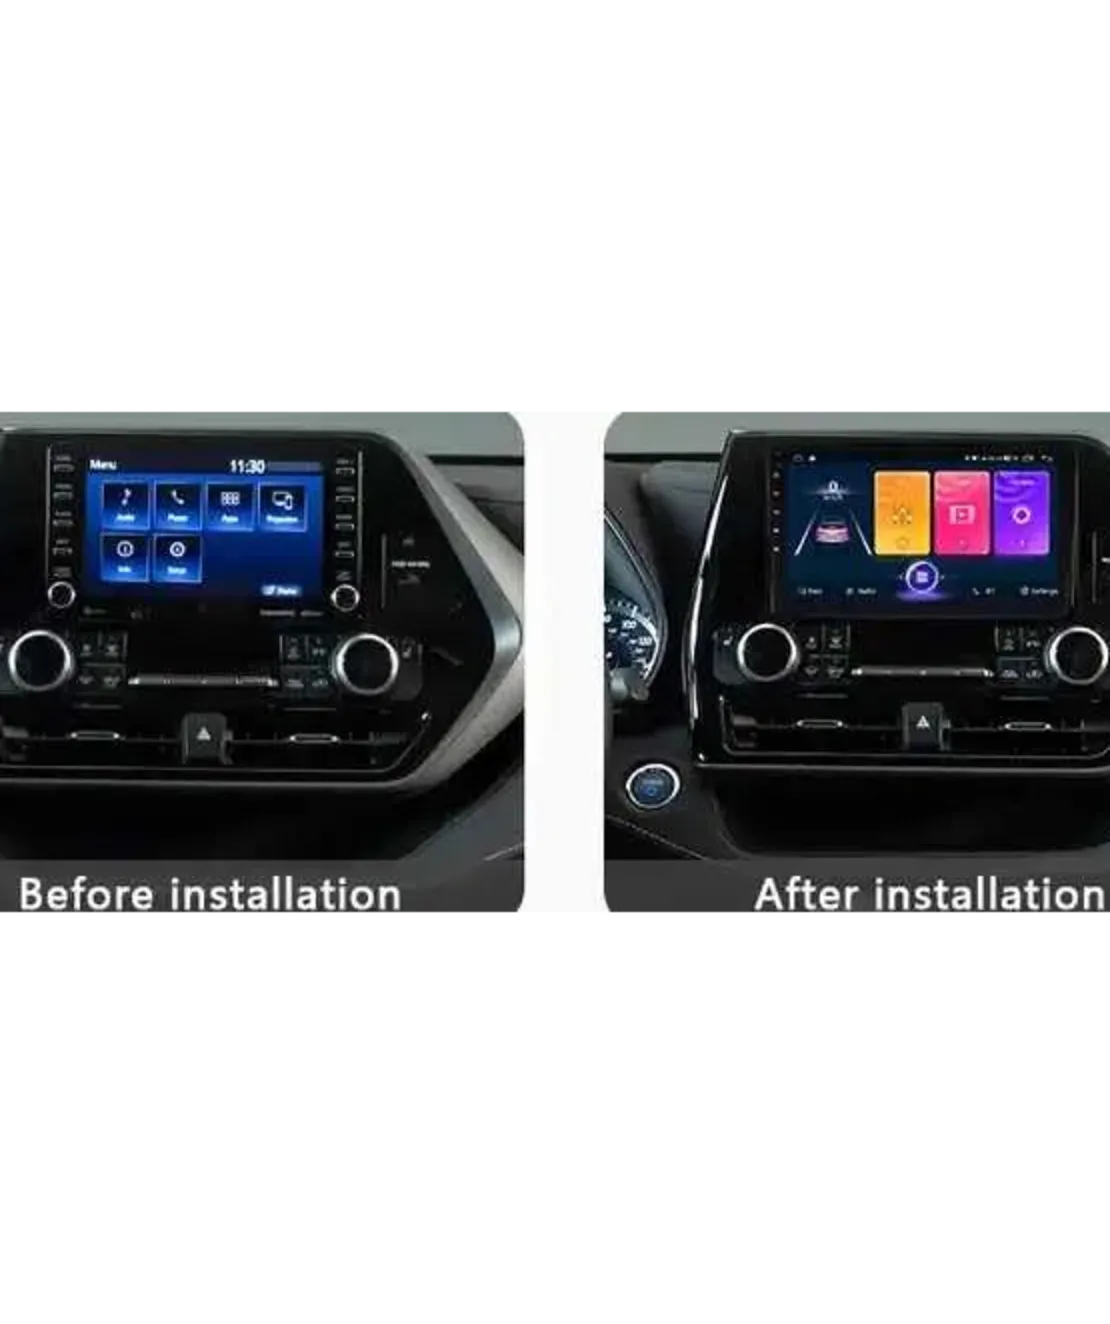 Toyota Highlander 2019-2021 Multimedia/Navigation